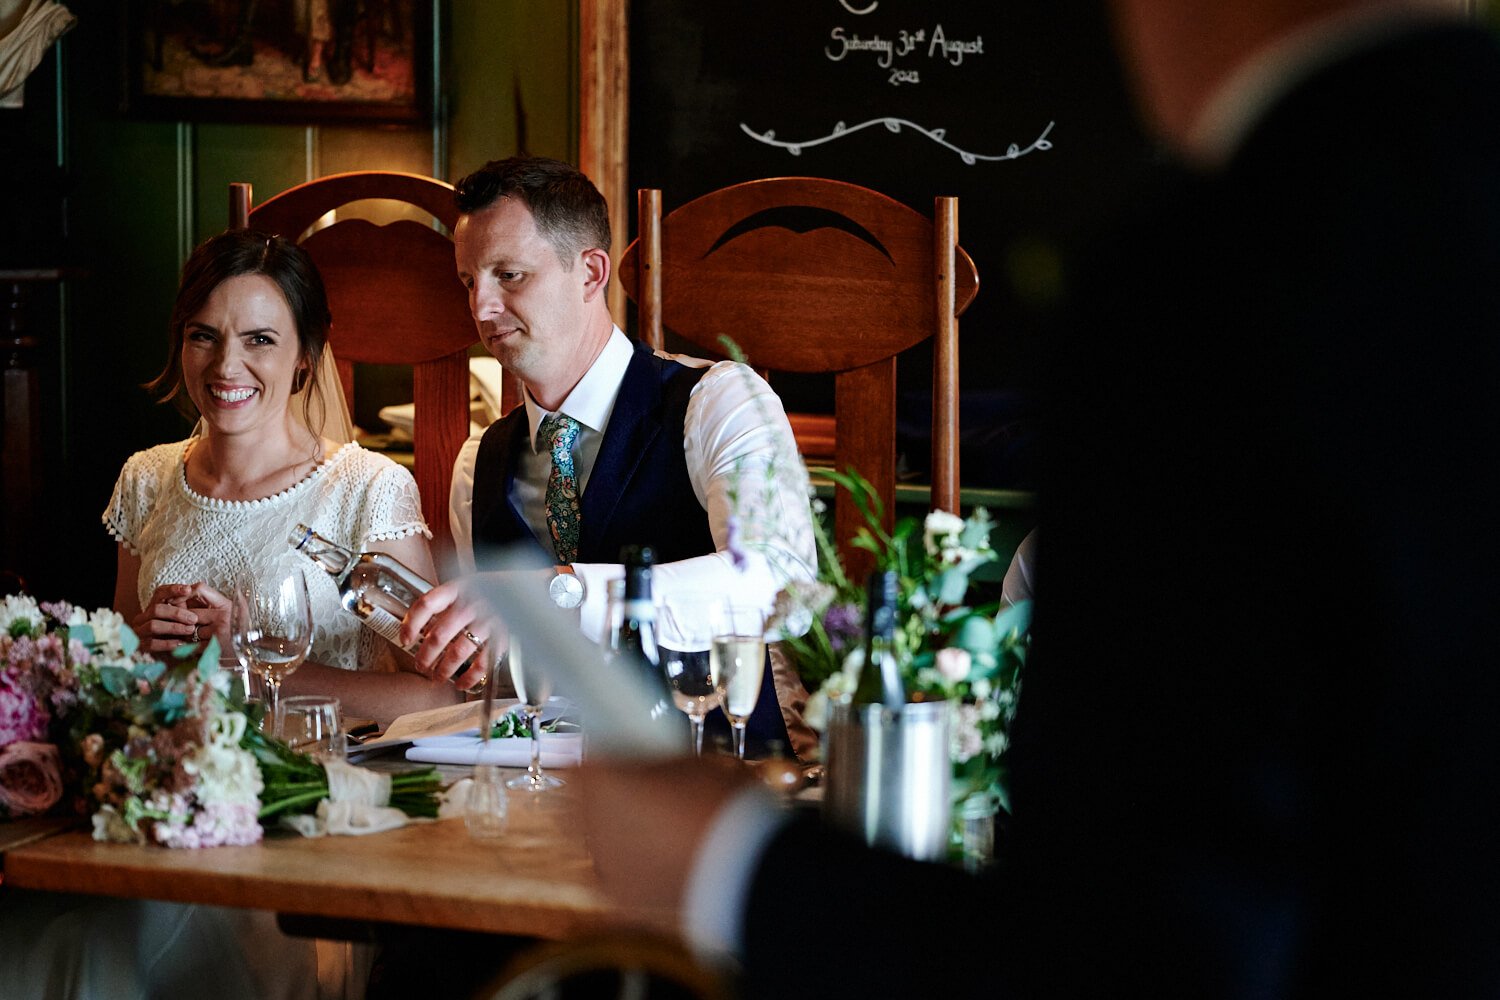 Wedding Photographer, Surrey | Leanne and Oli’s Farnham Wedding 31